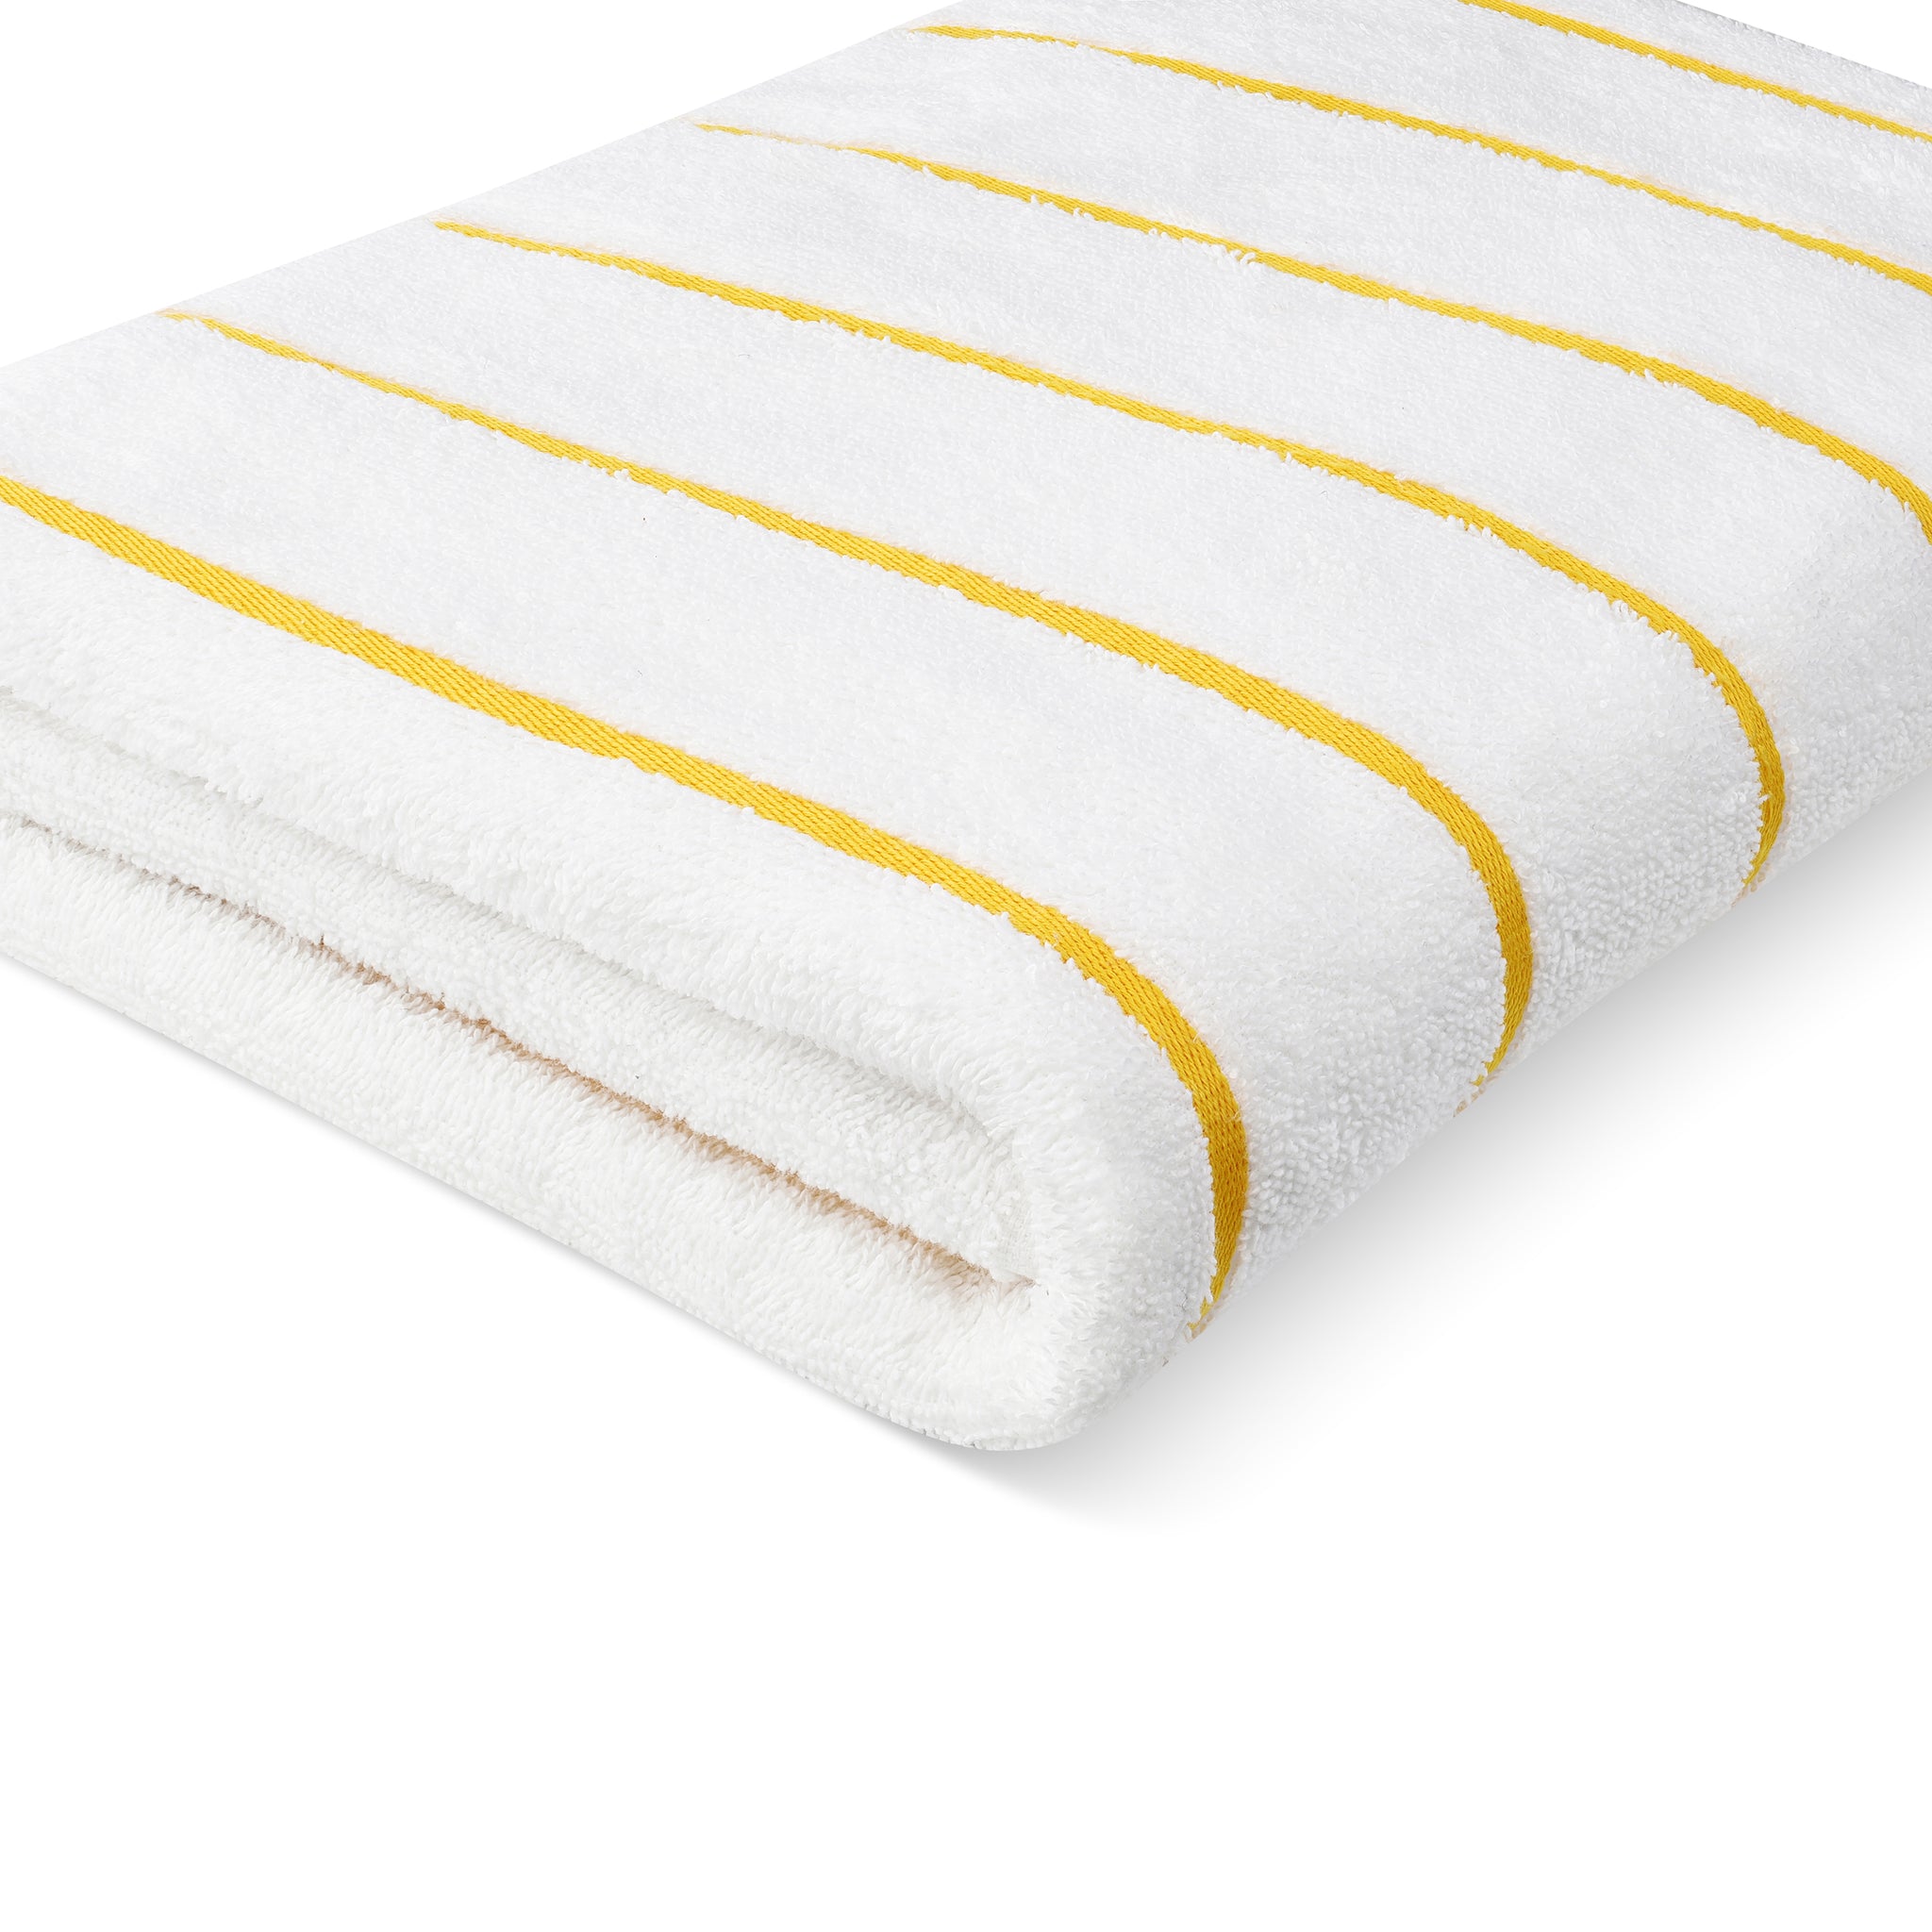 Deep Mahogany 18 Piece Plush Cotton Bath Towel Set